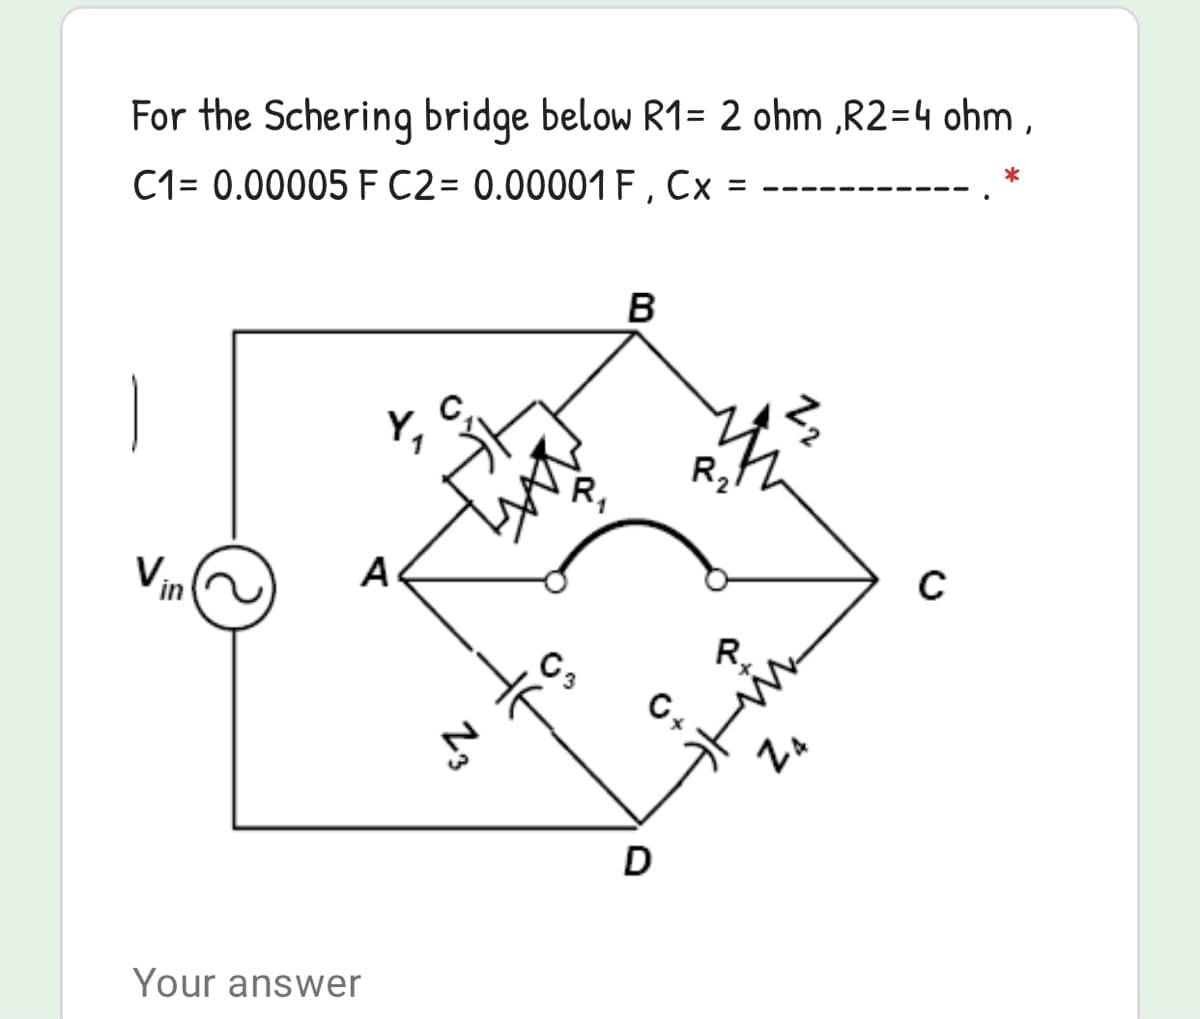 For the Schering bridge below R1= 2 ohm ,R2=4 ohm ,
C1= 0.00005 F C2= 0.00001 F , Cx
B
R,th
A
R.
C,
D
Your answer
*Z
